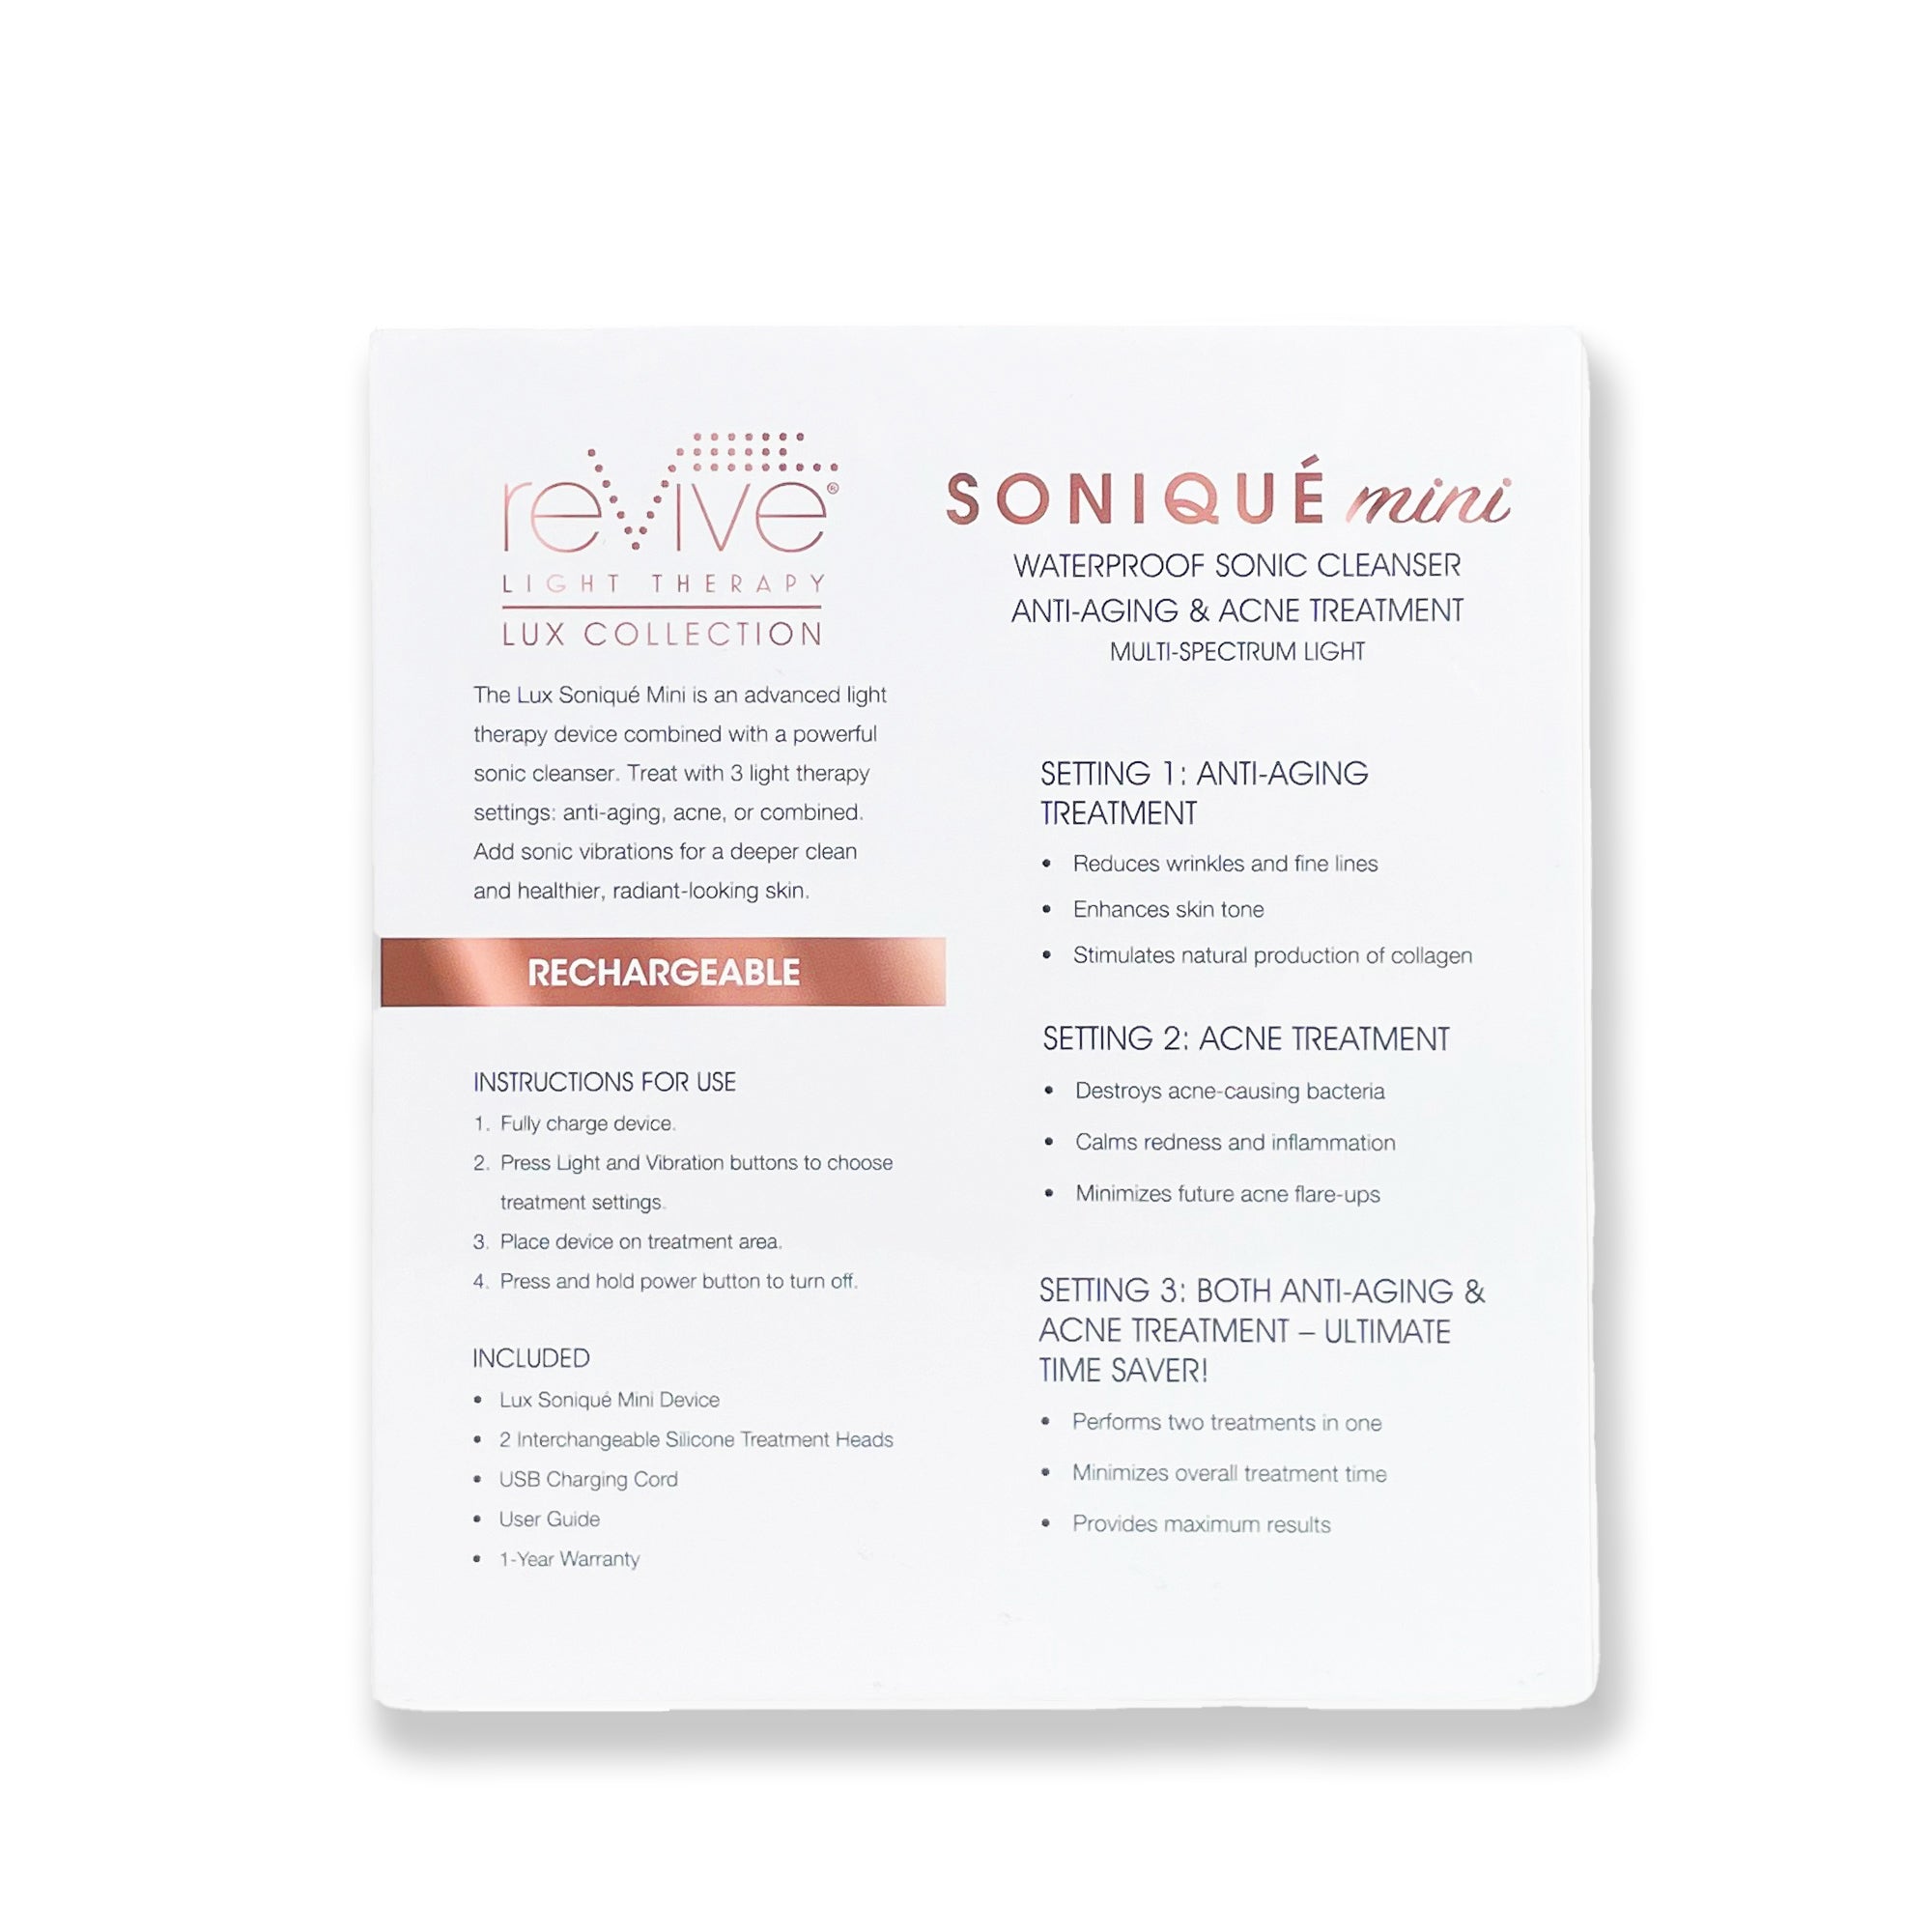 reVive Lux Sonique Mini Cleanser Anti-Aging & Acne